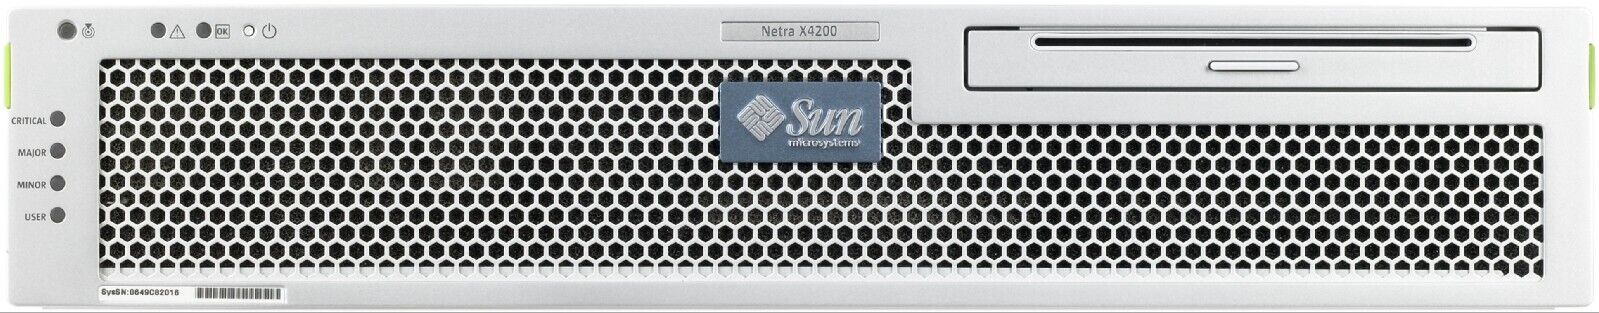 SUN Oracle Netra X4200 2*2.Ghz CPU 2GB 2*146GB Disk 2x DC Power DVD Rack Kit